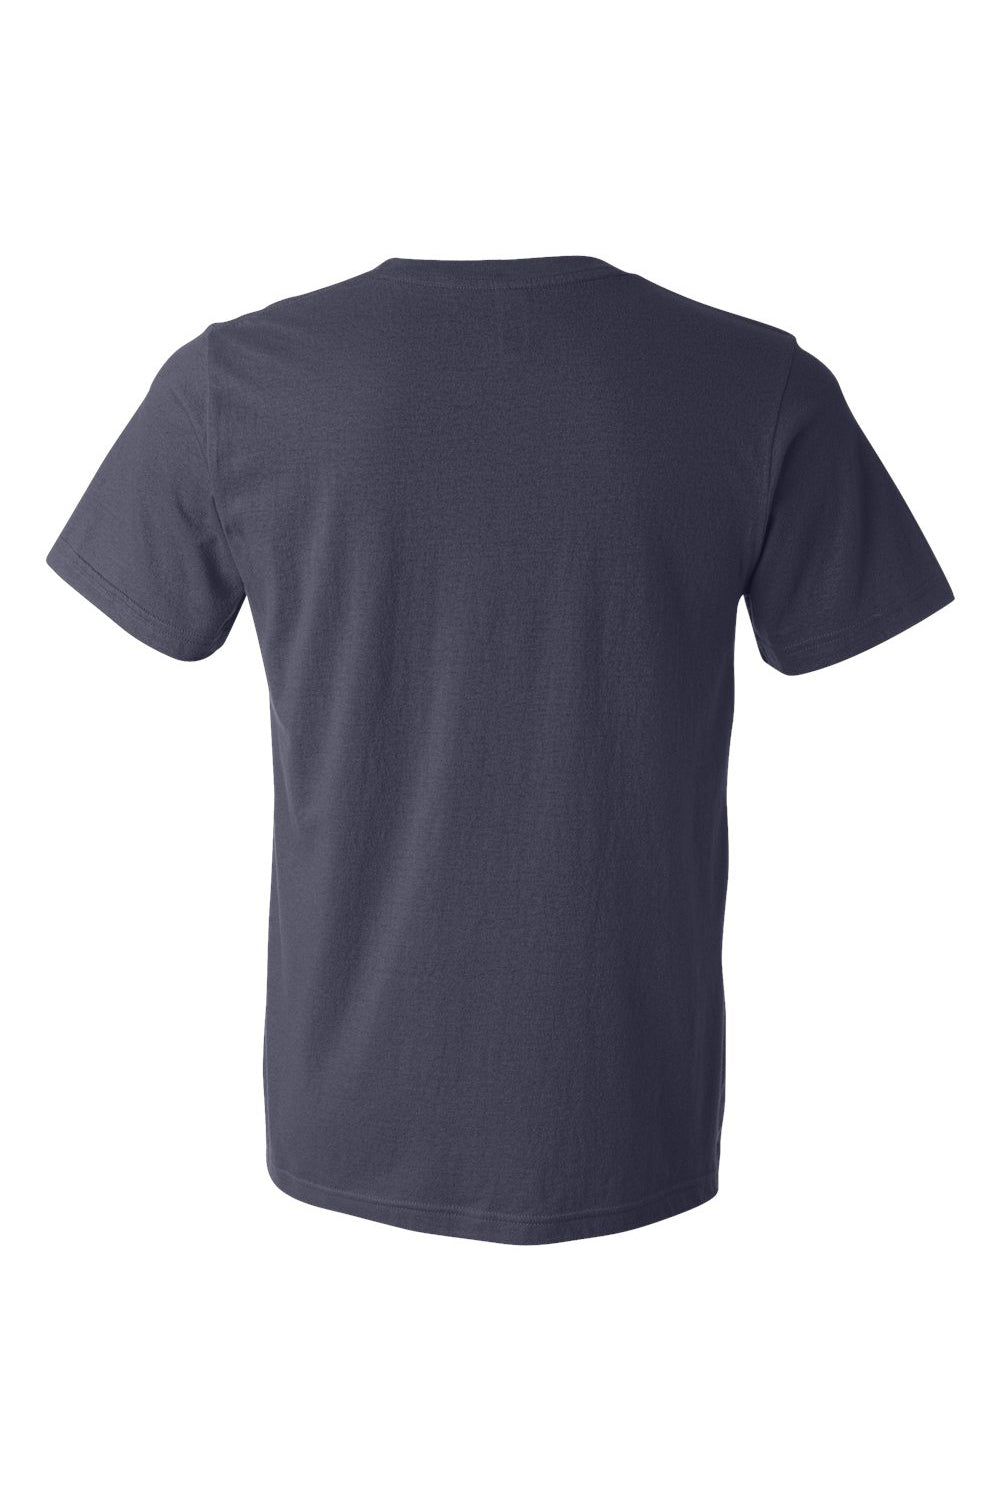 Bella + Canvas 3021 Mens Jersey Short Sleeve Crewneck T-Shirt w/ Pocket Navy Blue Flat Back